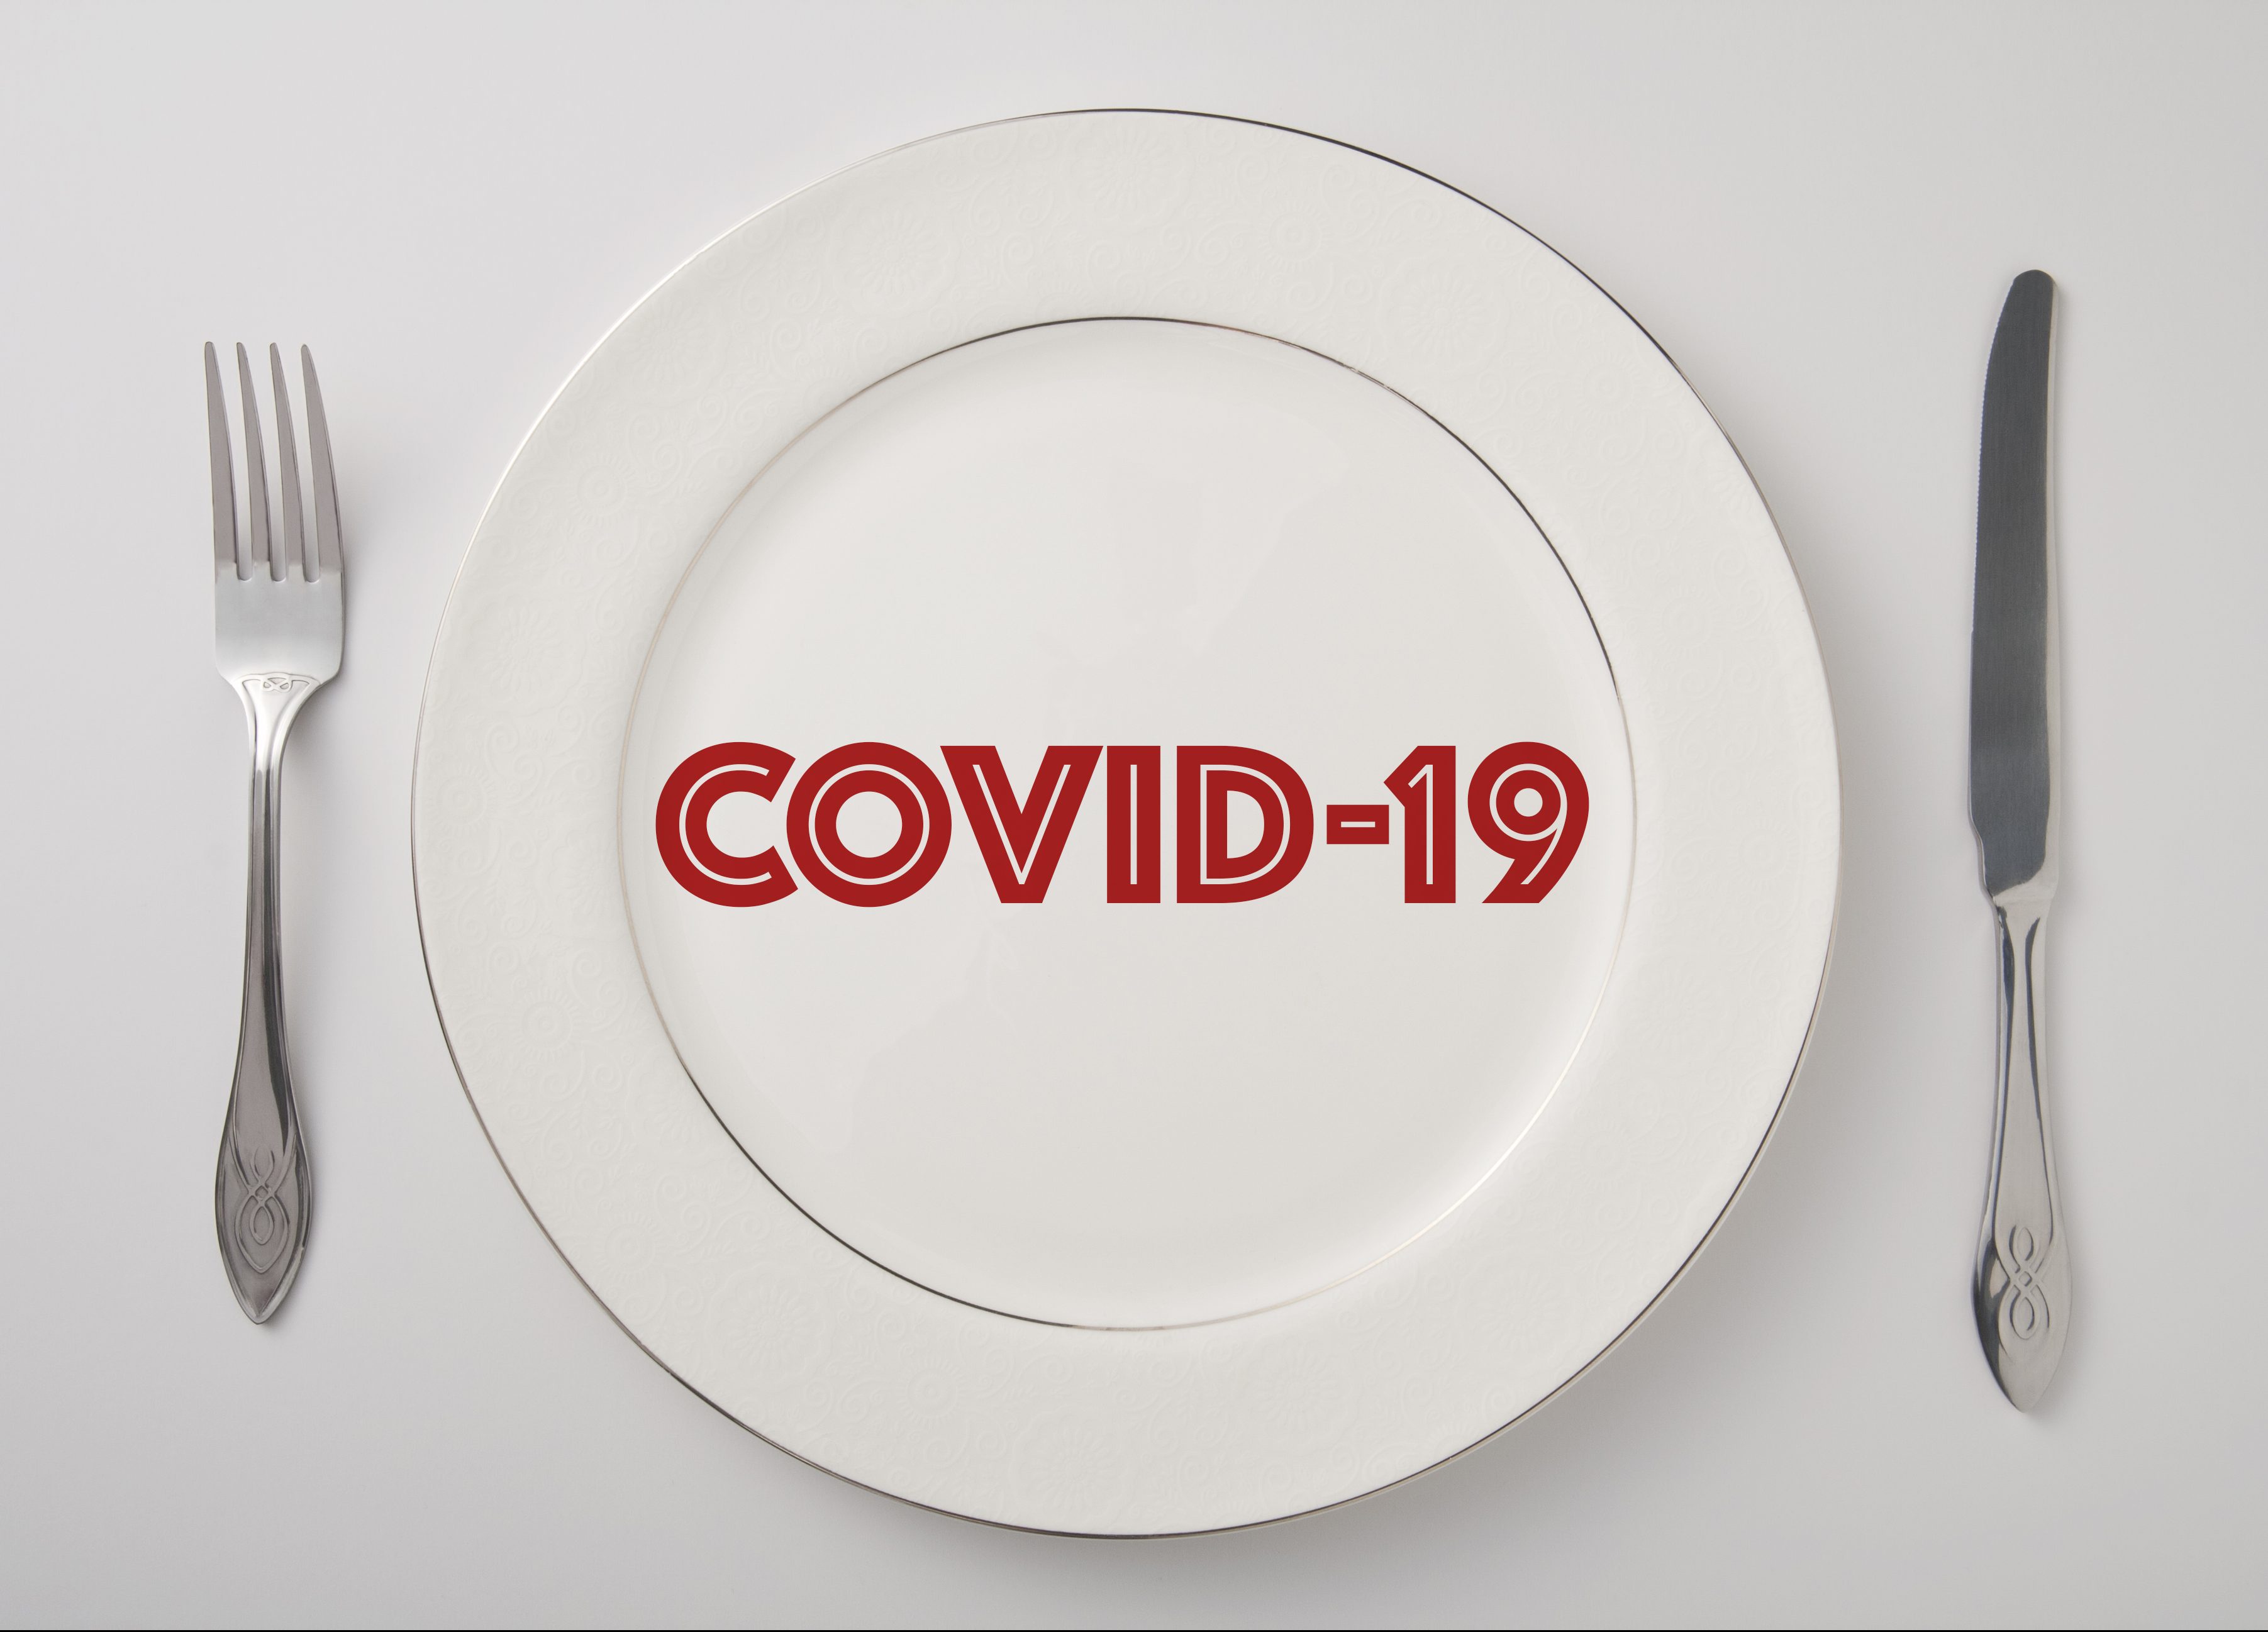 FUNIBER-covid-diecinueve-coronavirus-food-concept-